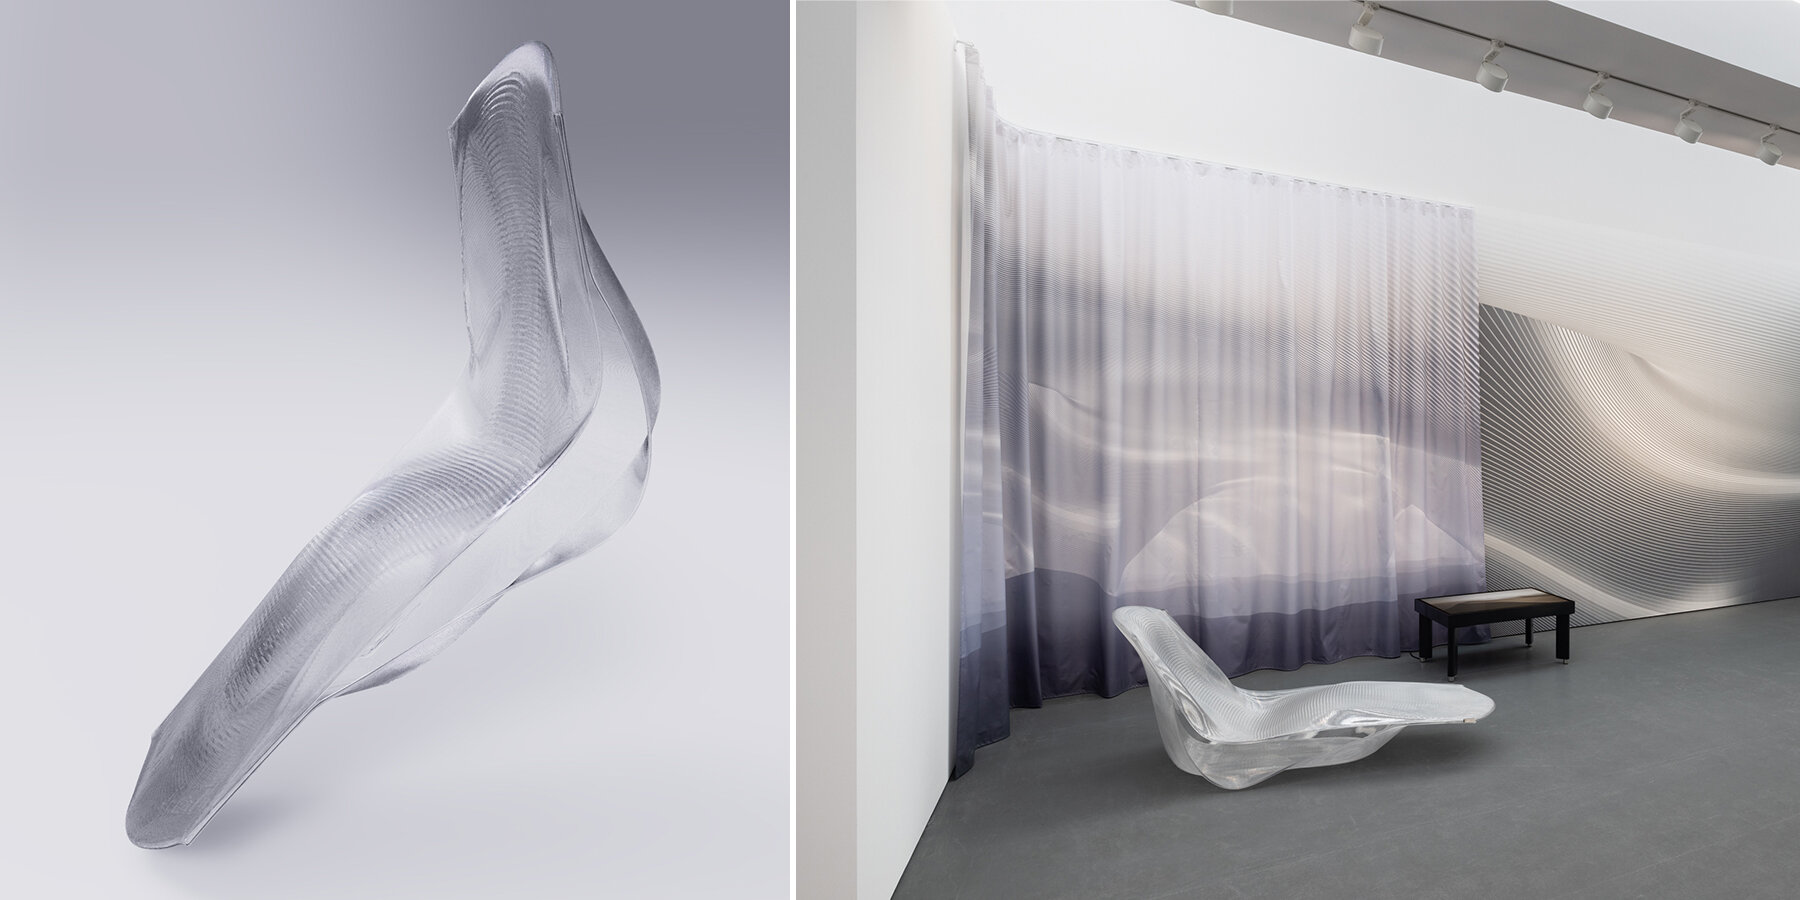 ben elliot and nagami's 3D-printed Xchair embodies metaverse aesthetics